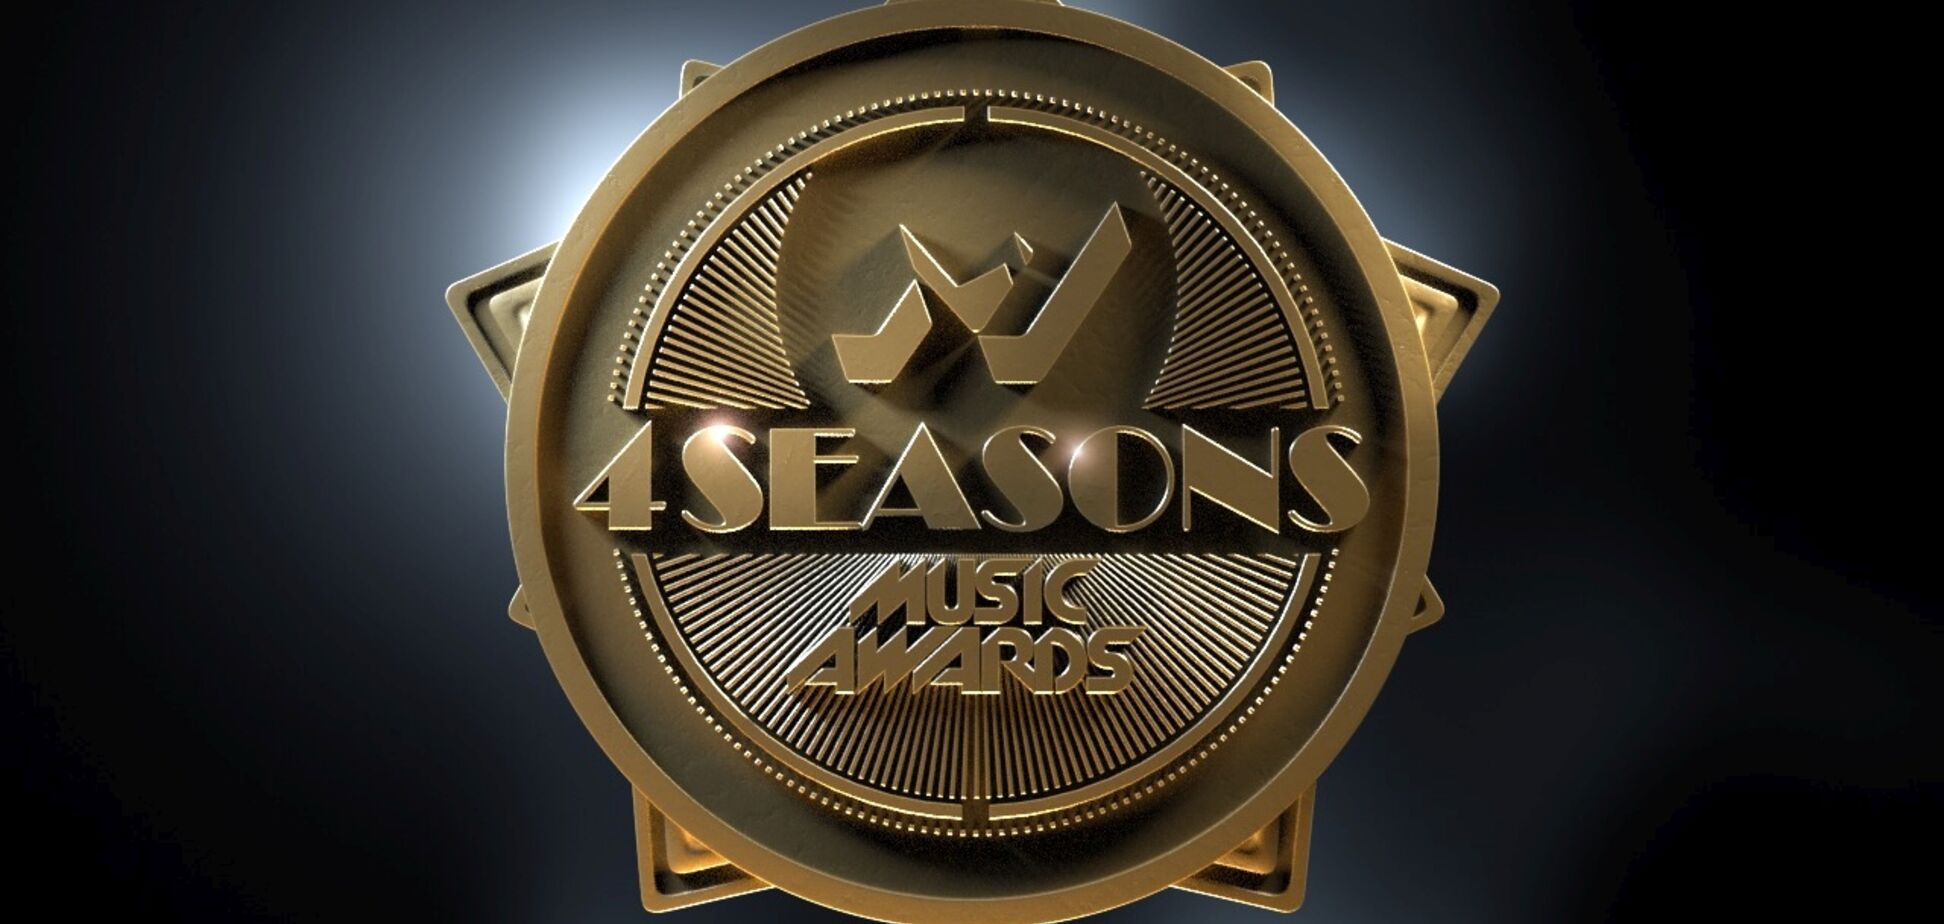 Телеканал М1 объявляет номинантов сезона 'Весна' от M1 Music Awards